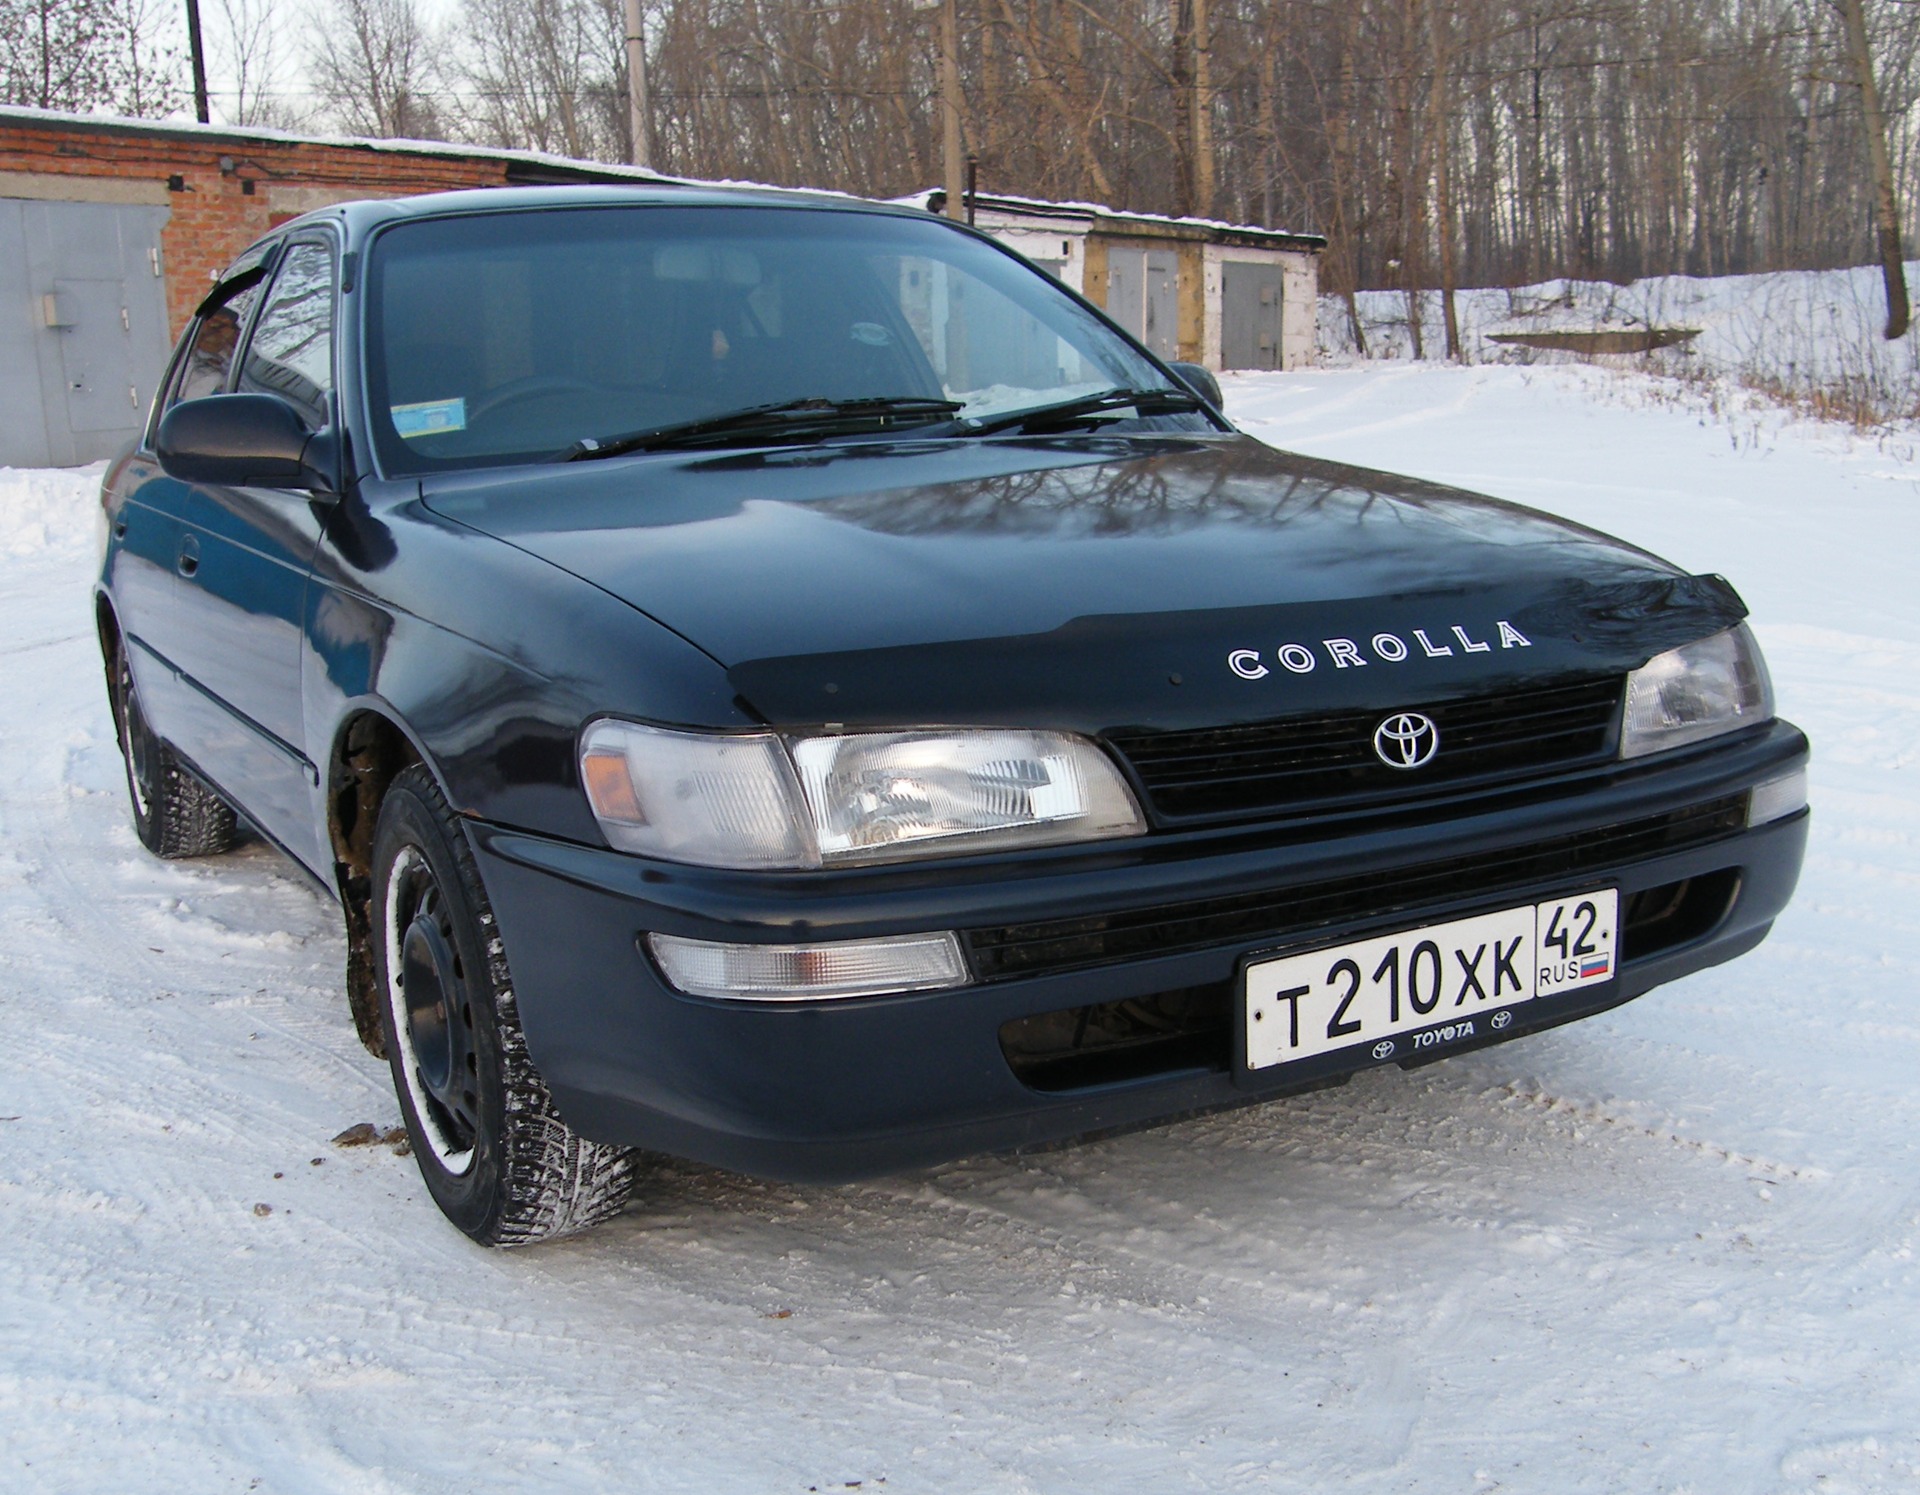 24 2010 Toyota Corolla 15 1992